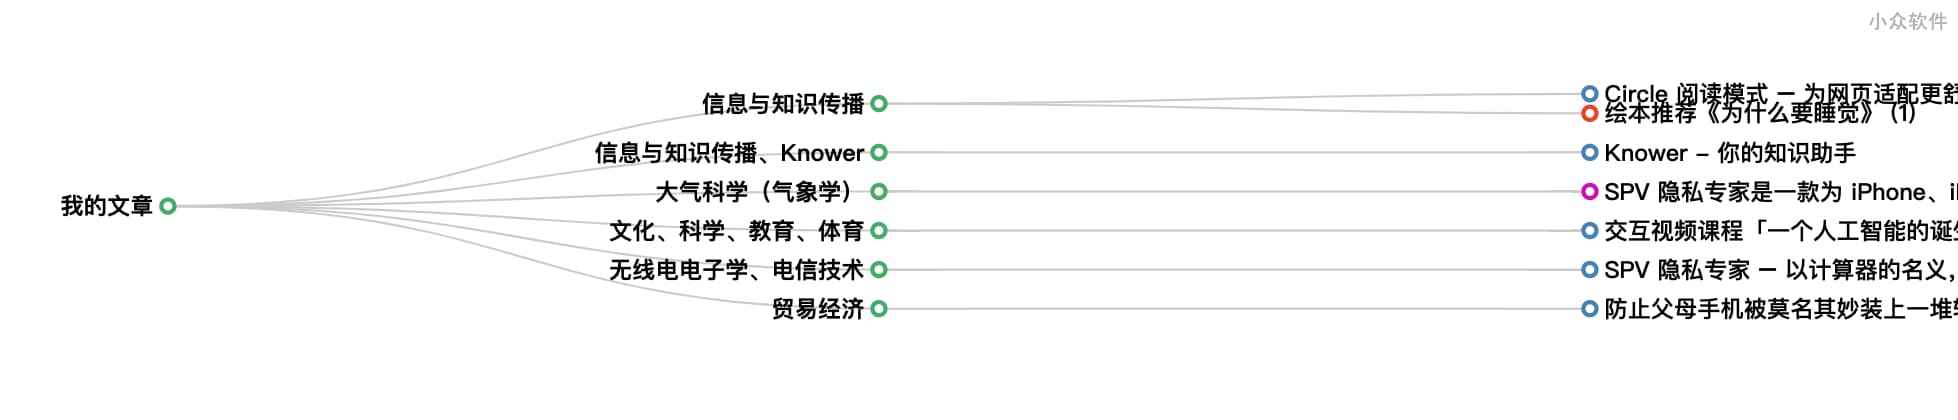 Knower - 能自动识别、提炼、检索、聚合的网络书签、文档收藏工具 5